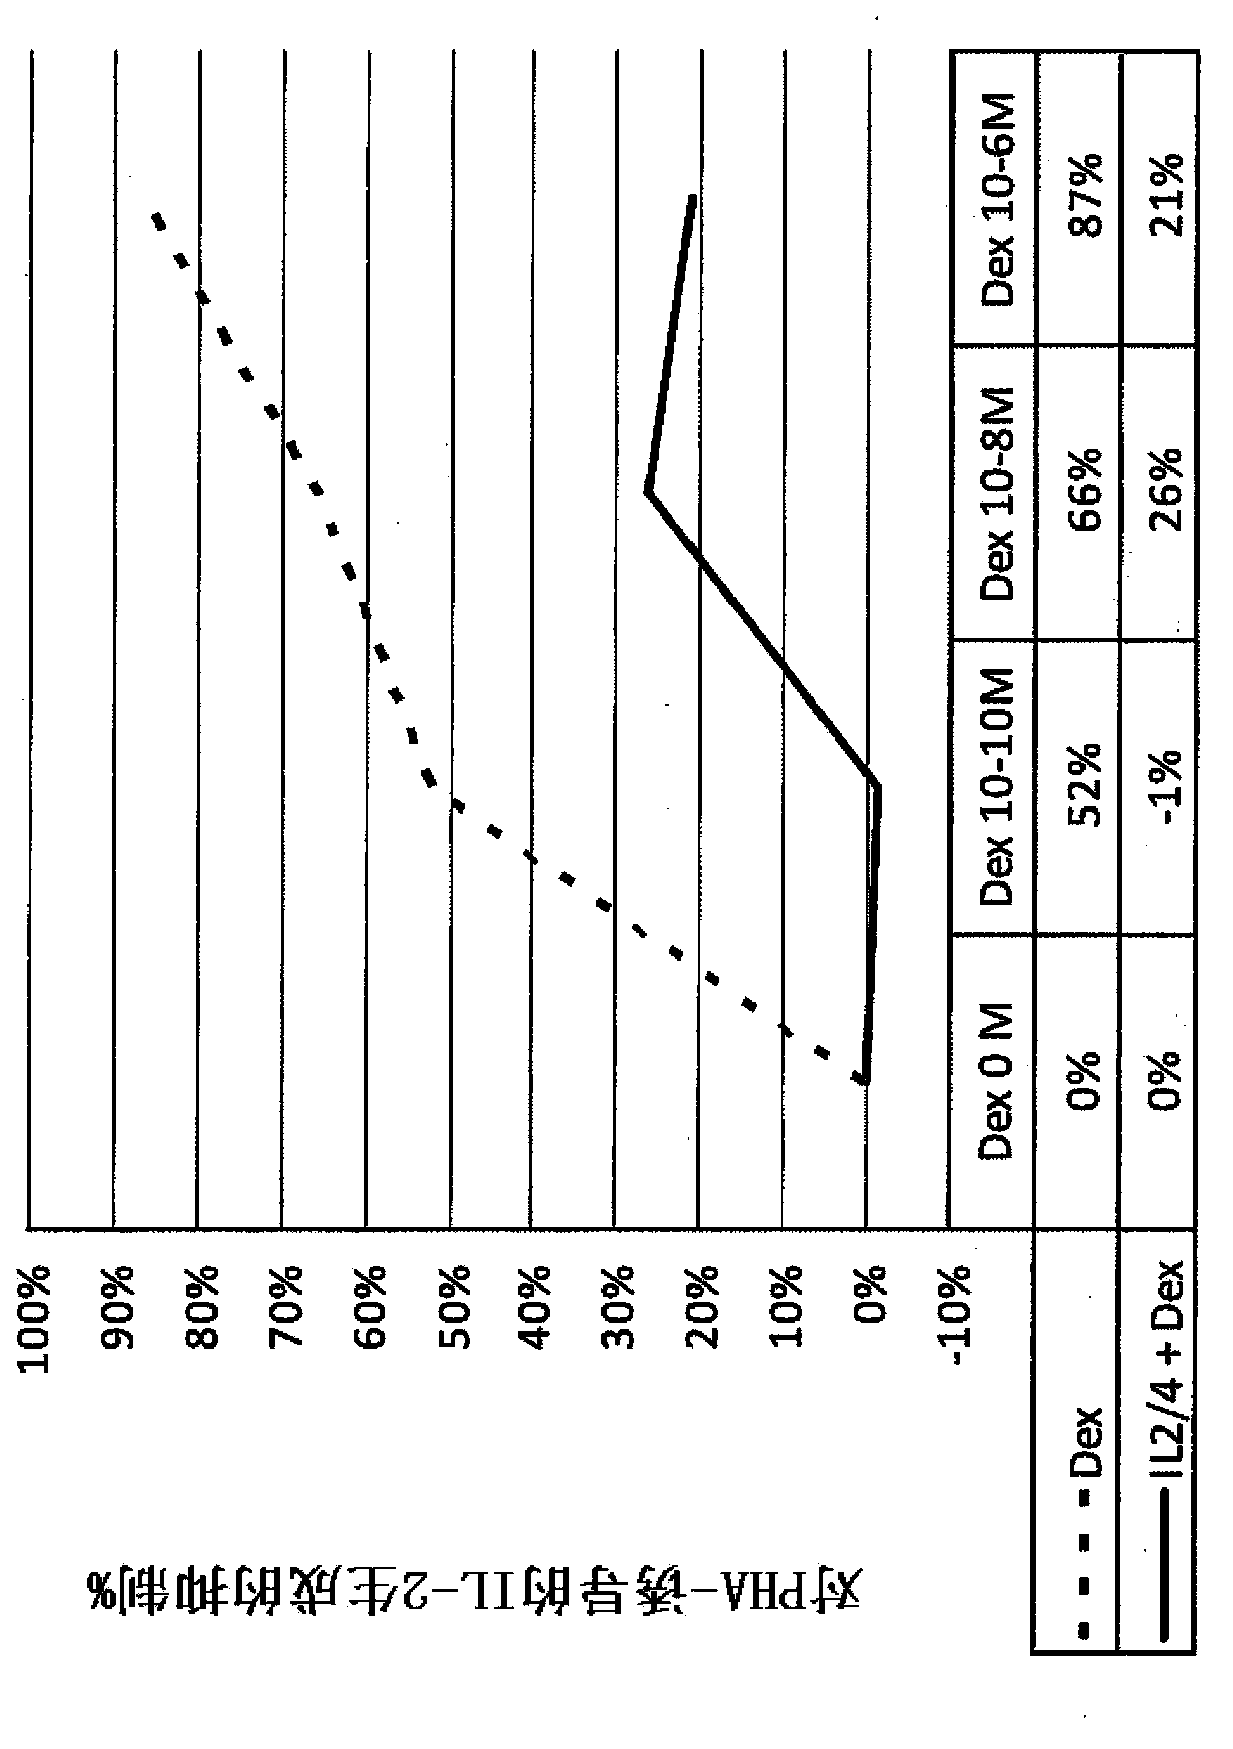 Pulmonary delivery of 17-hydroxyprogesterone caproate (17-HPC)